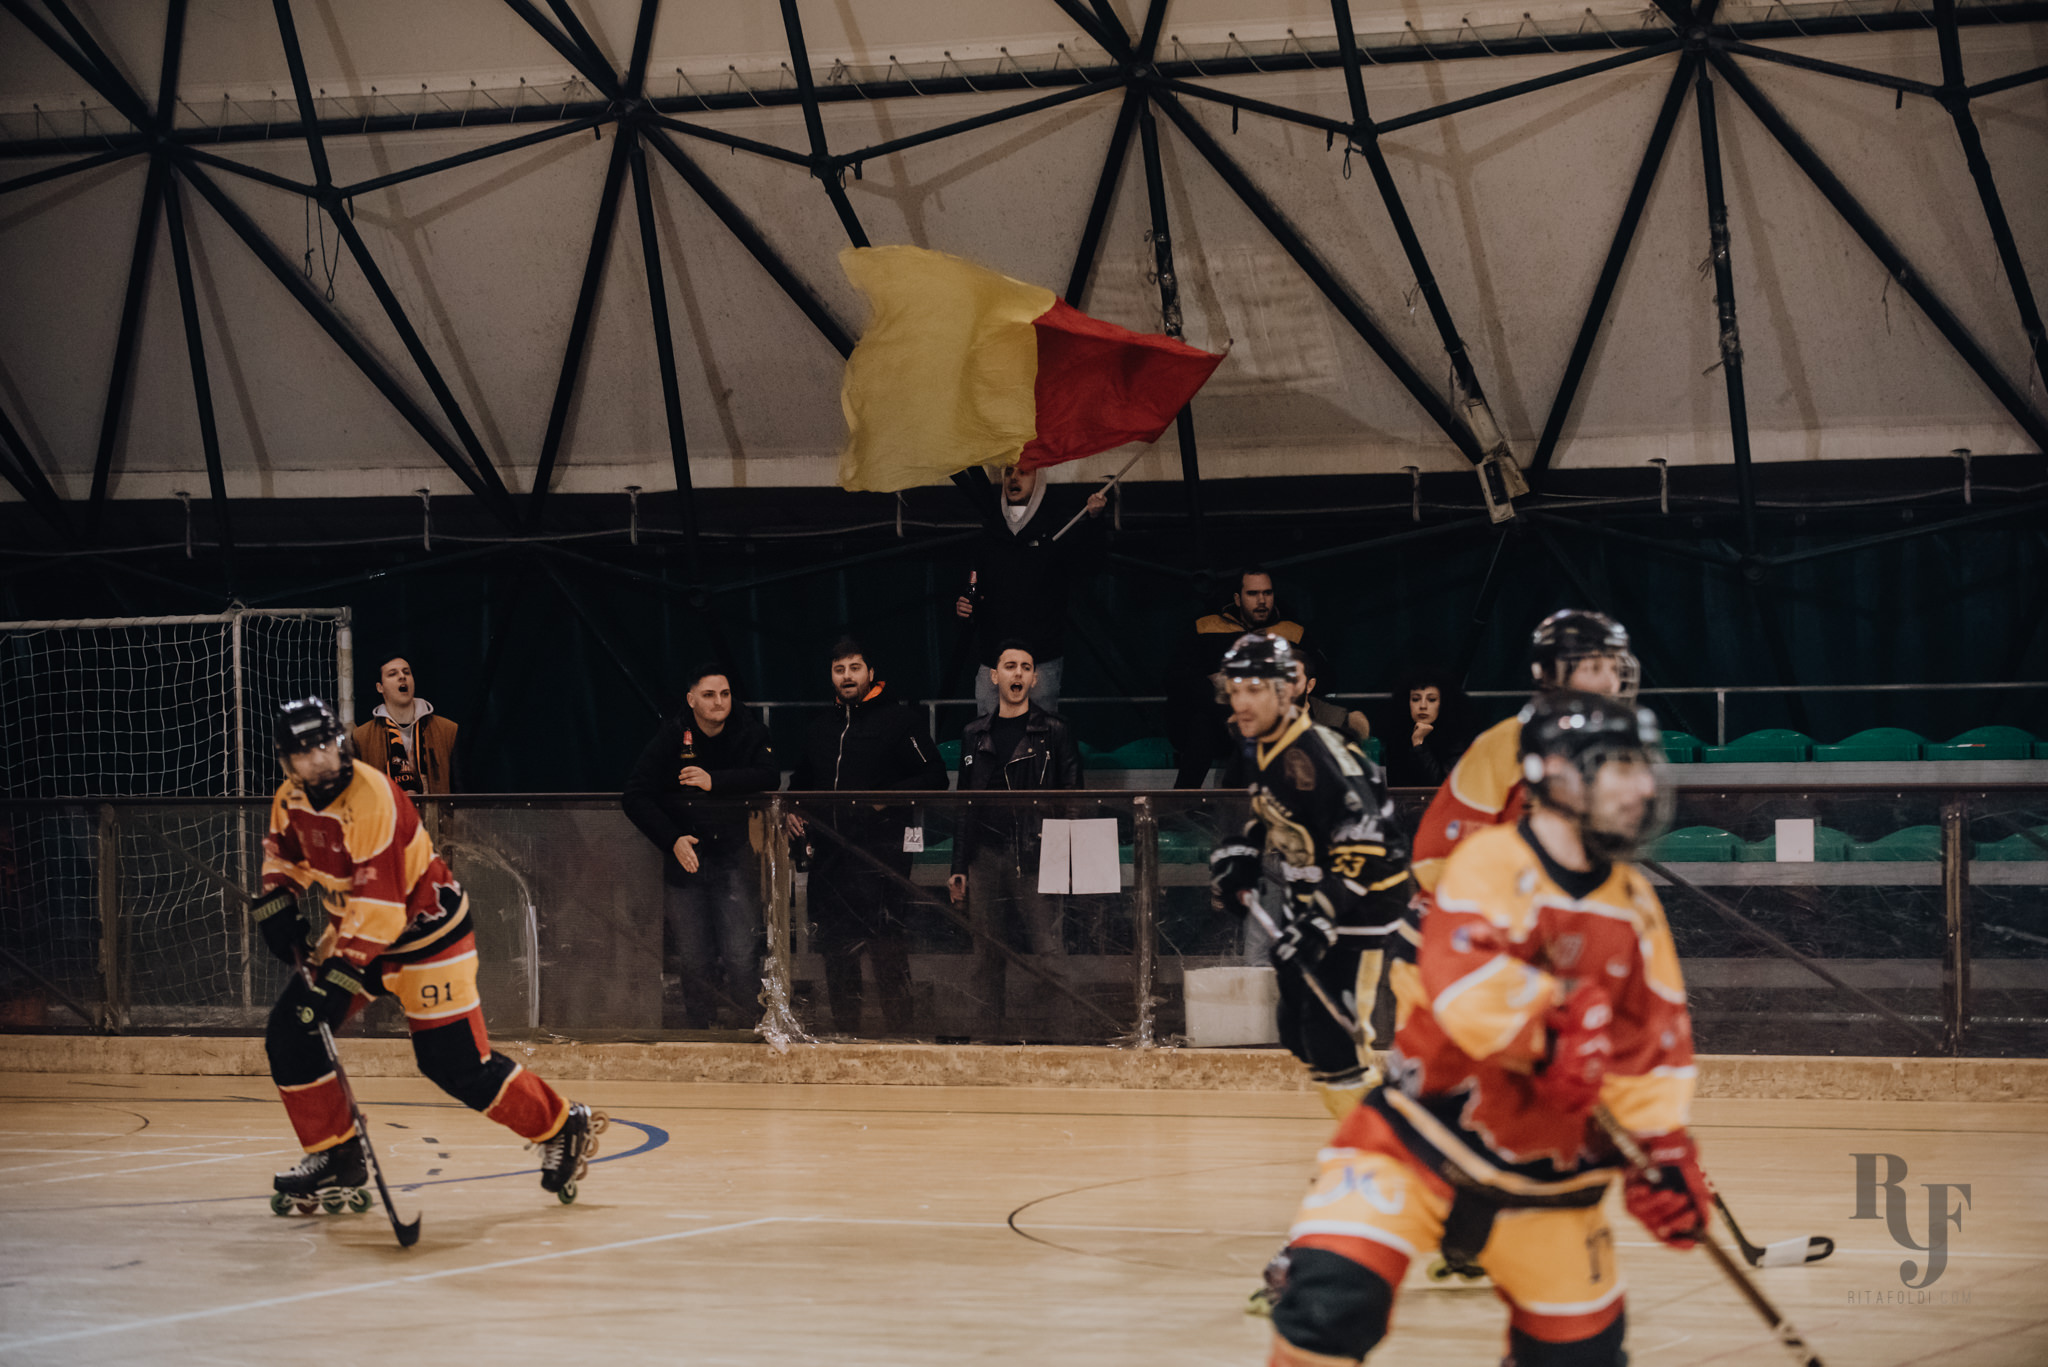 Hockey Mammuth, hockey e pattinaggio a roma, hockey giovanile, Mammuth Roma, Mammuth hockey roma, Old Style Torre Pellice, sports photo, FISR, inline hockey, Rita Foldi photo